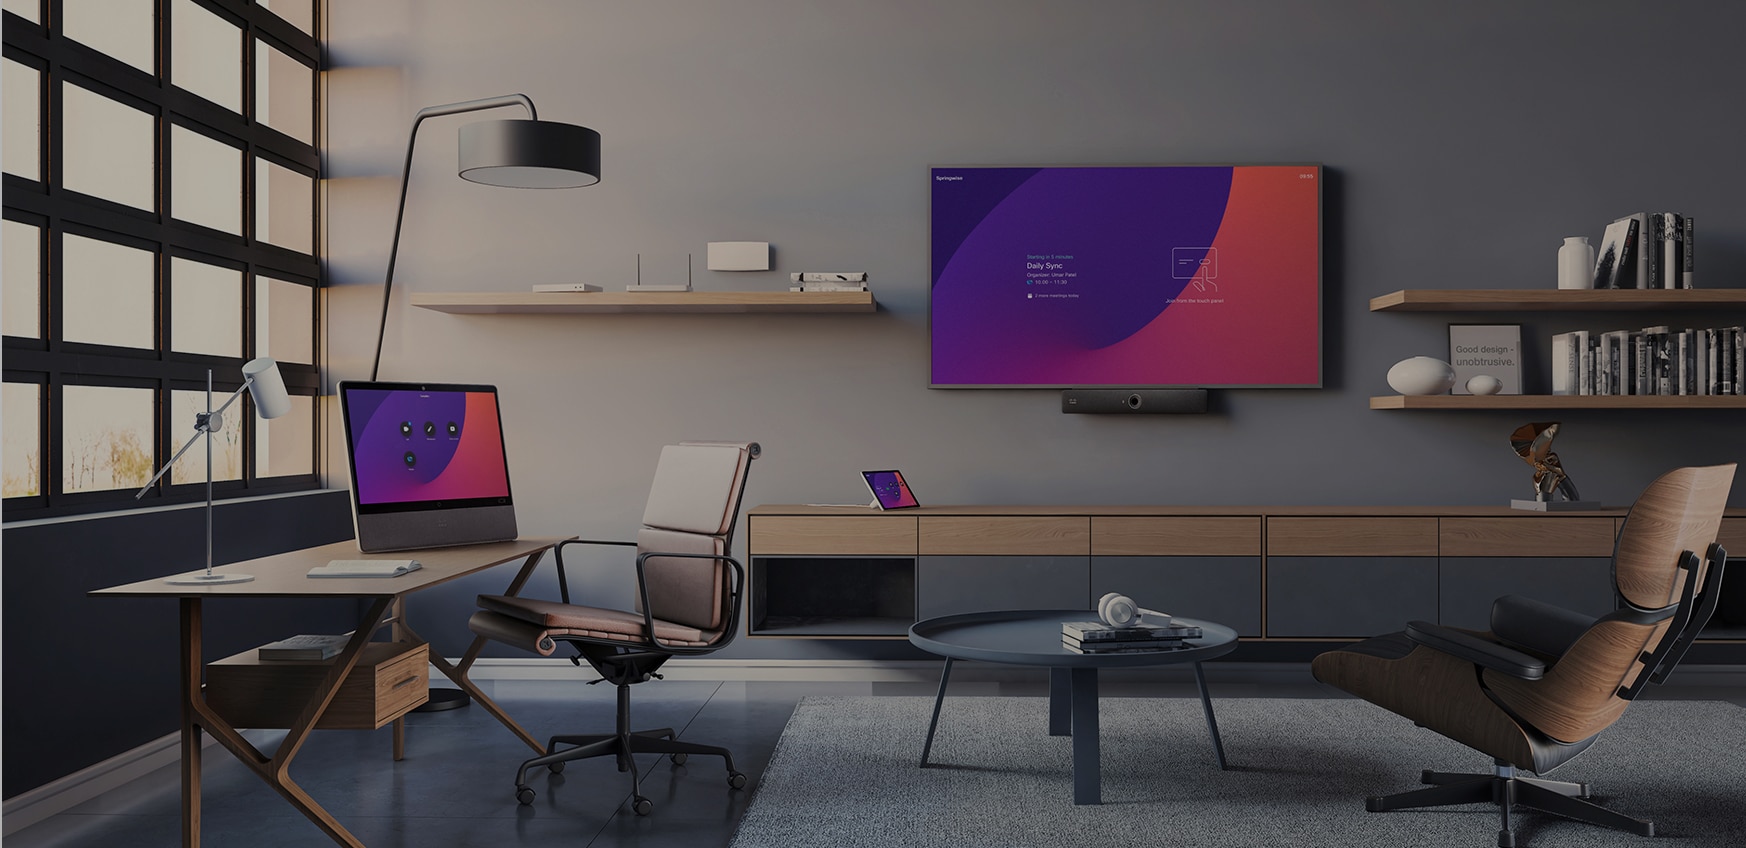 A dedicated office featuring a Webex Desk and a Webex Room Bar video bar.